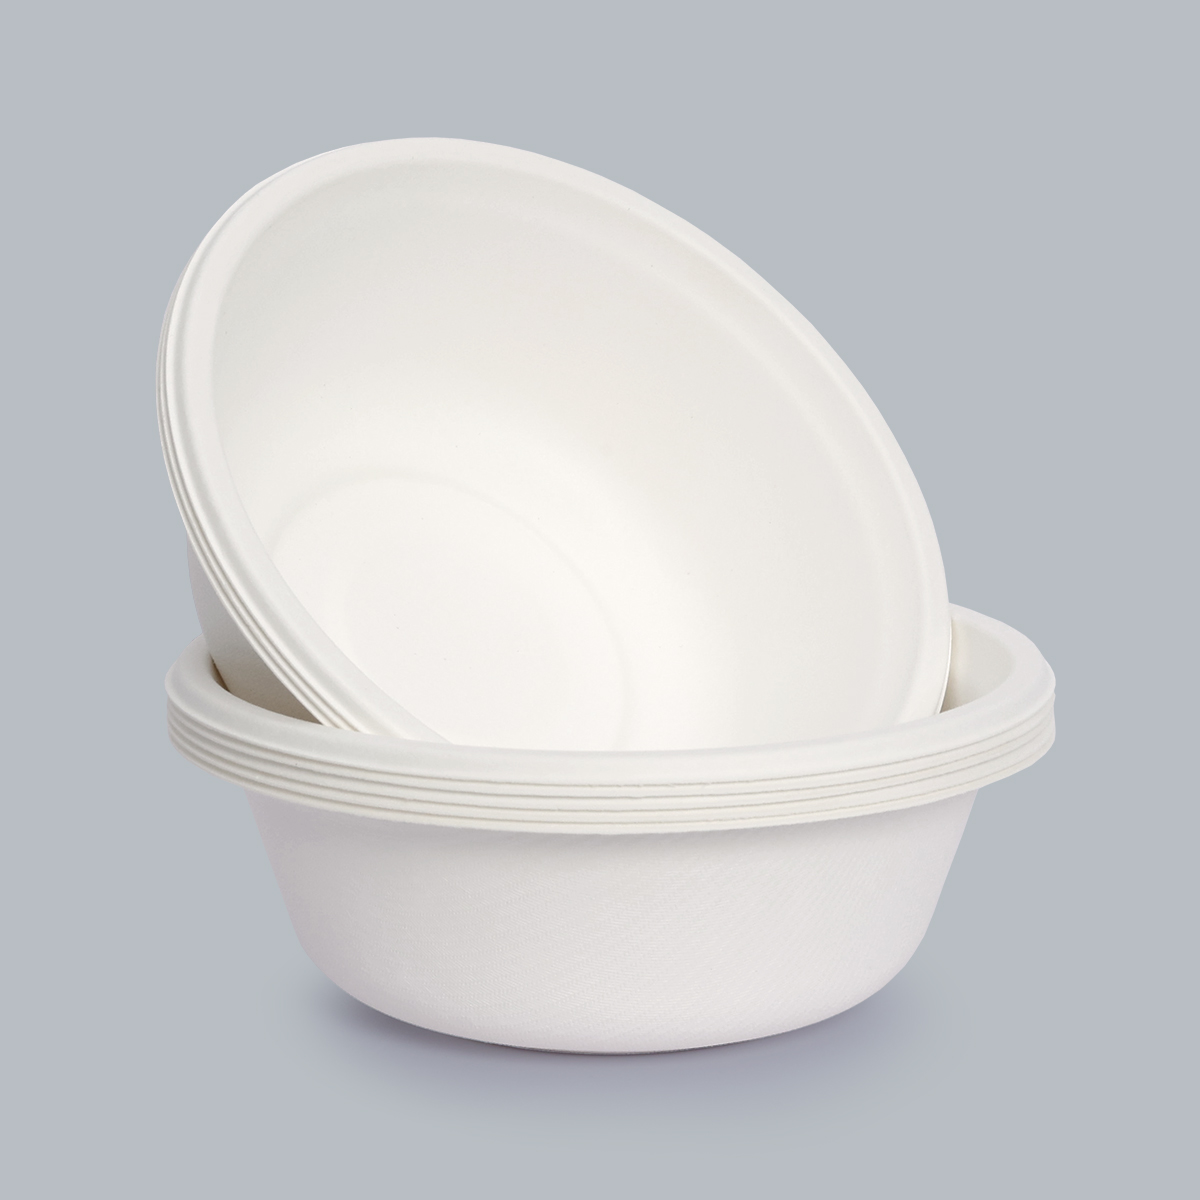 Healthy bowls environmentally friendly tableware Beautiful bowls